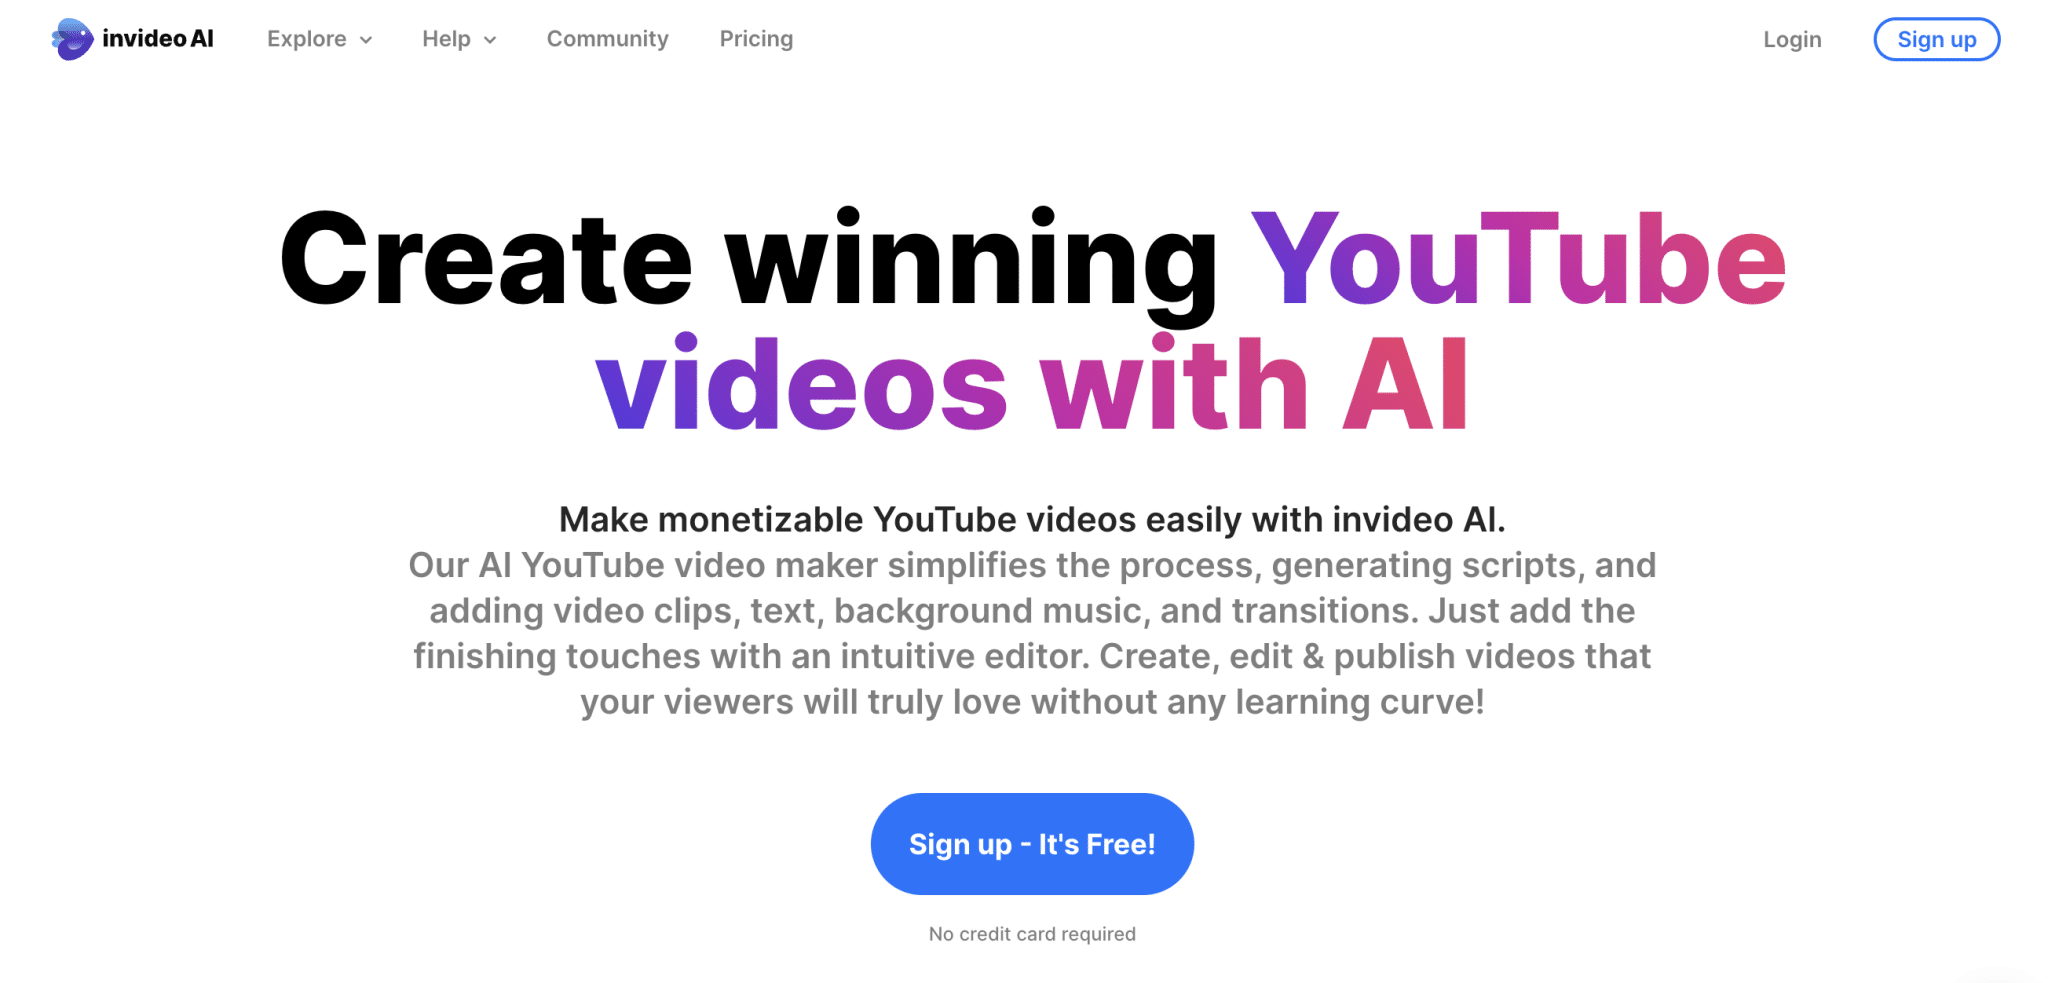 inVideo AI: Best Video Editor With AI?